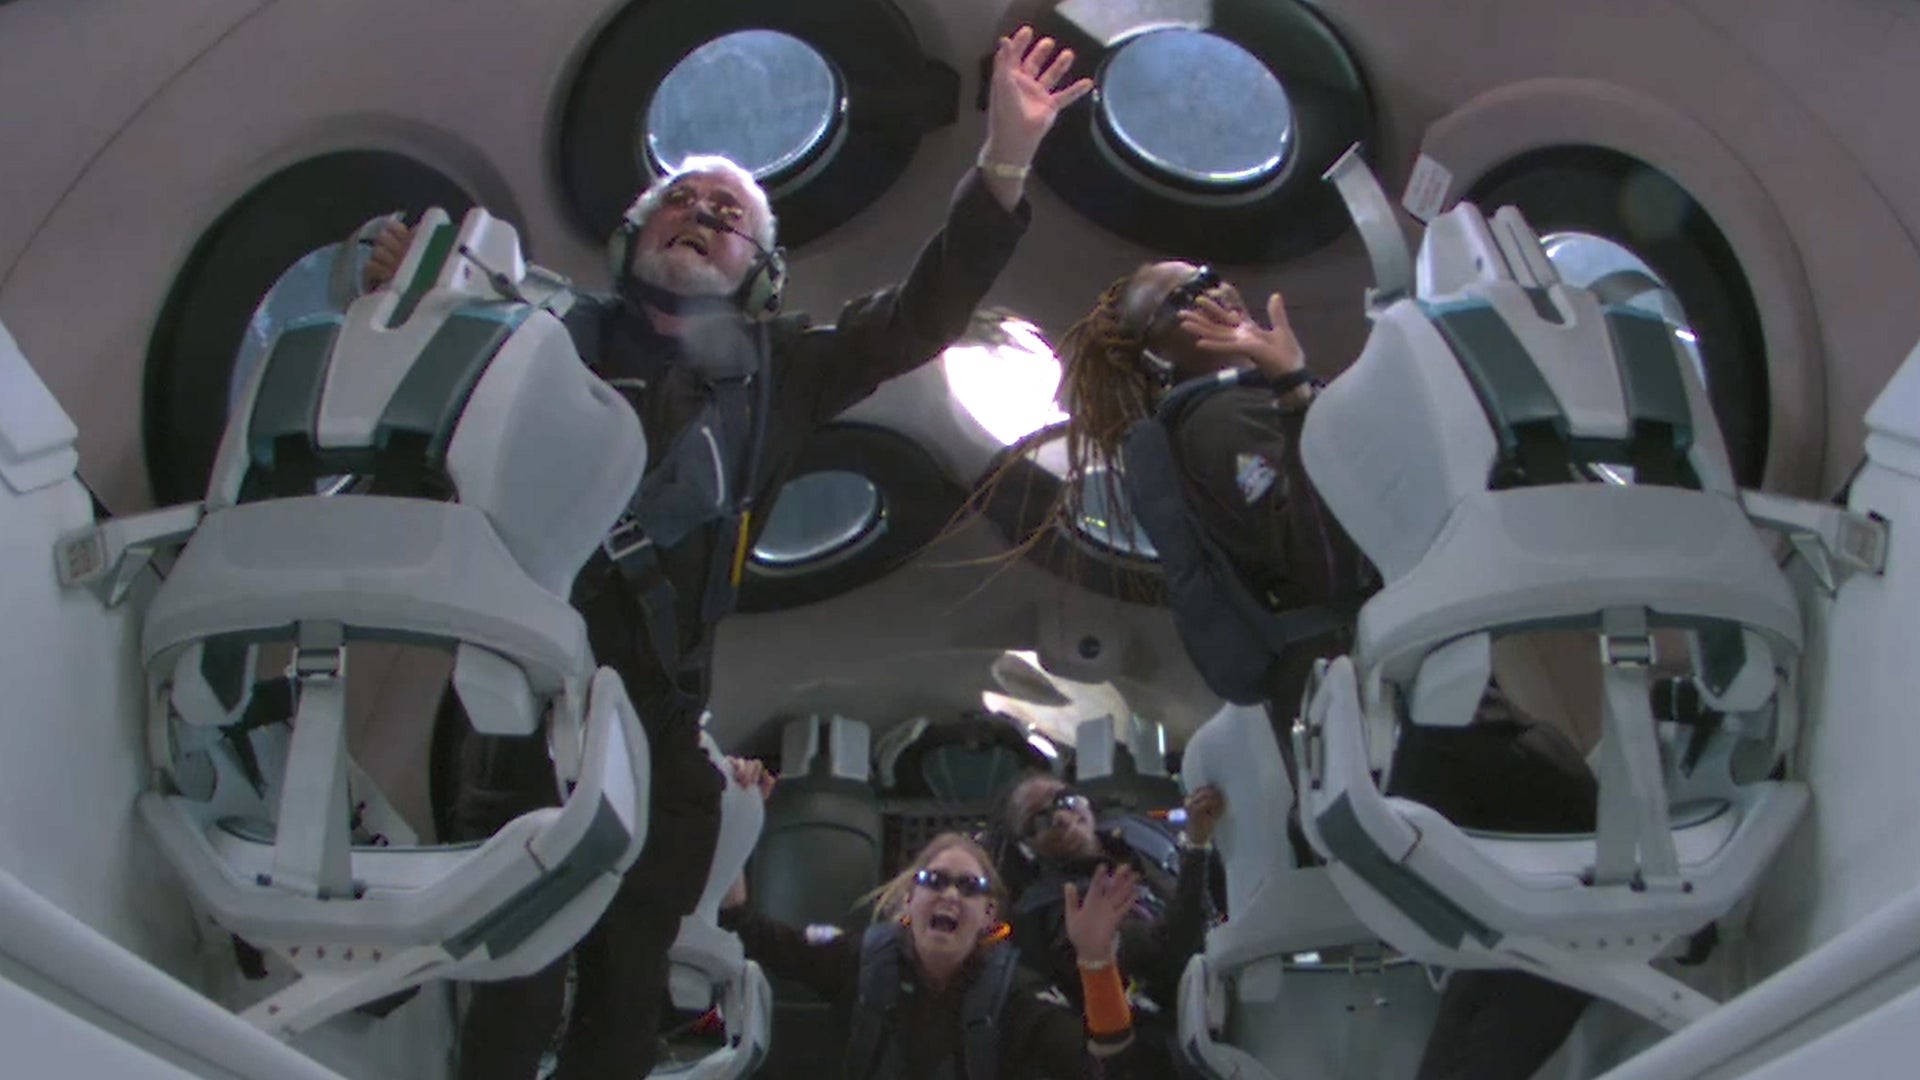 Passengers had the chance to experience zero gravity